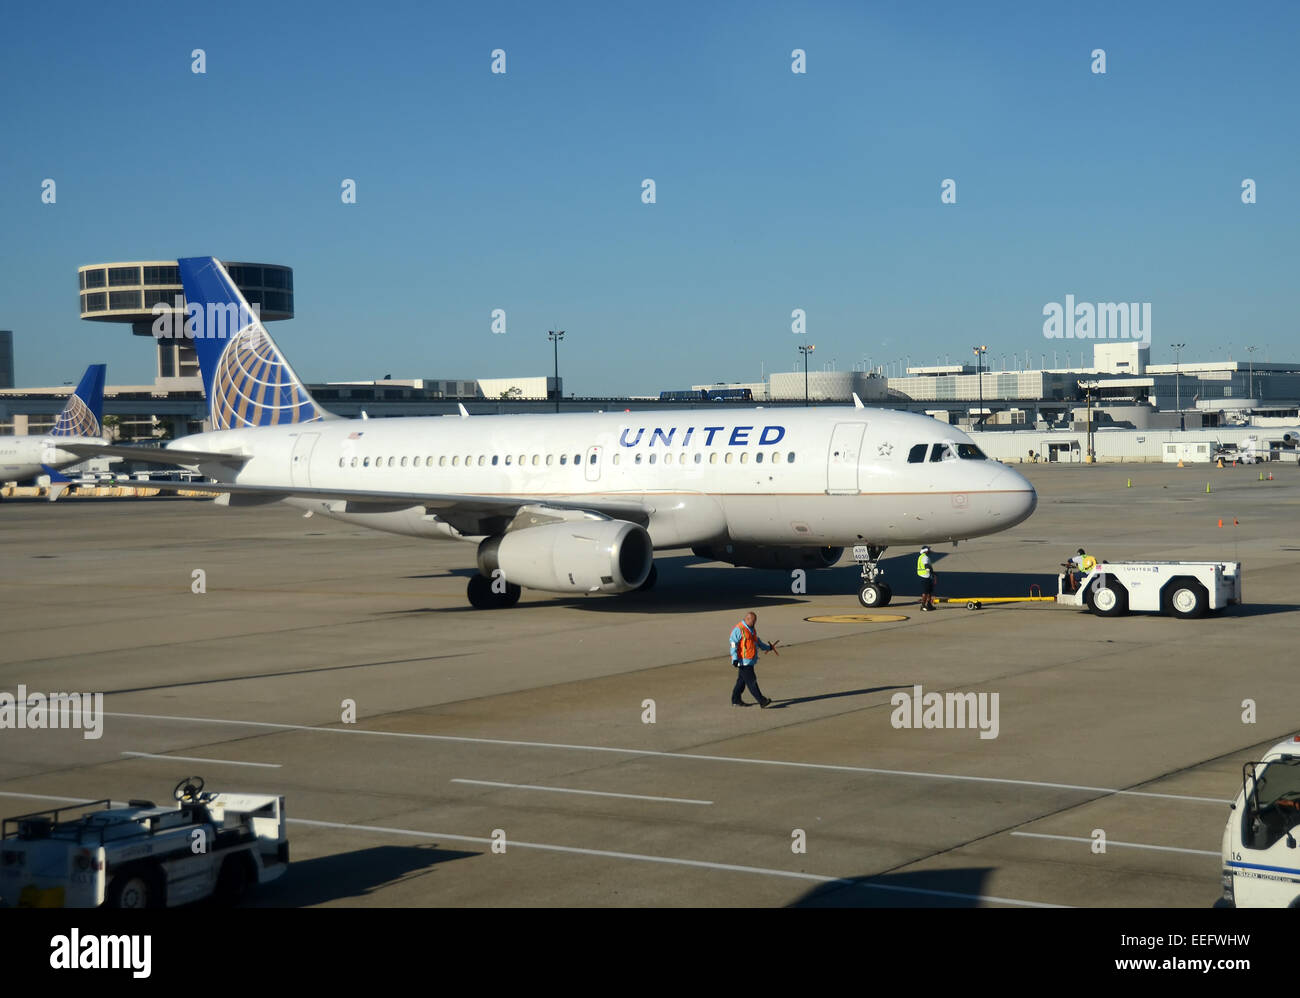 CHICAGO - SEPTEMBER 22: United Airlines passenger jet arrives in its home base of Chicago on September 22, 2013. Stock Photo